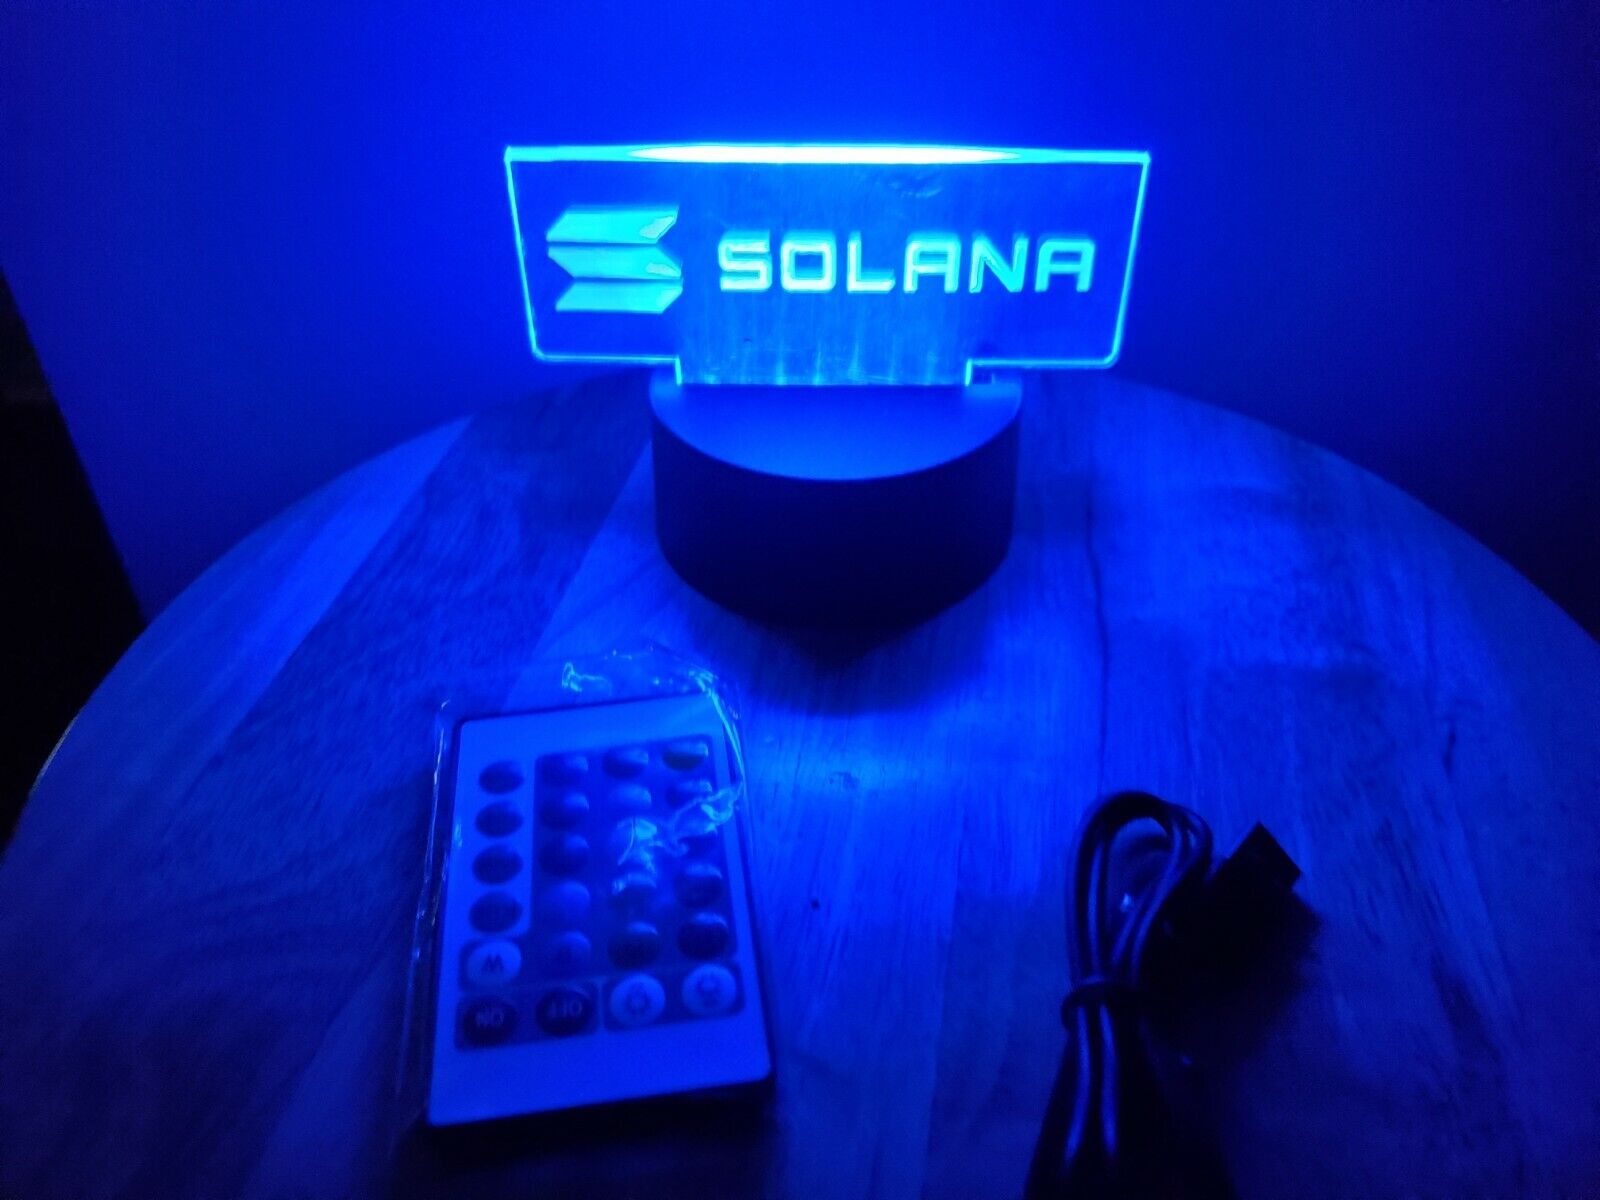 SOLANA CRYPTO, RGB LED POWERED PLEXI DESKTOP SIGN - REMOTE, STAND & USB CORD